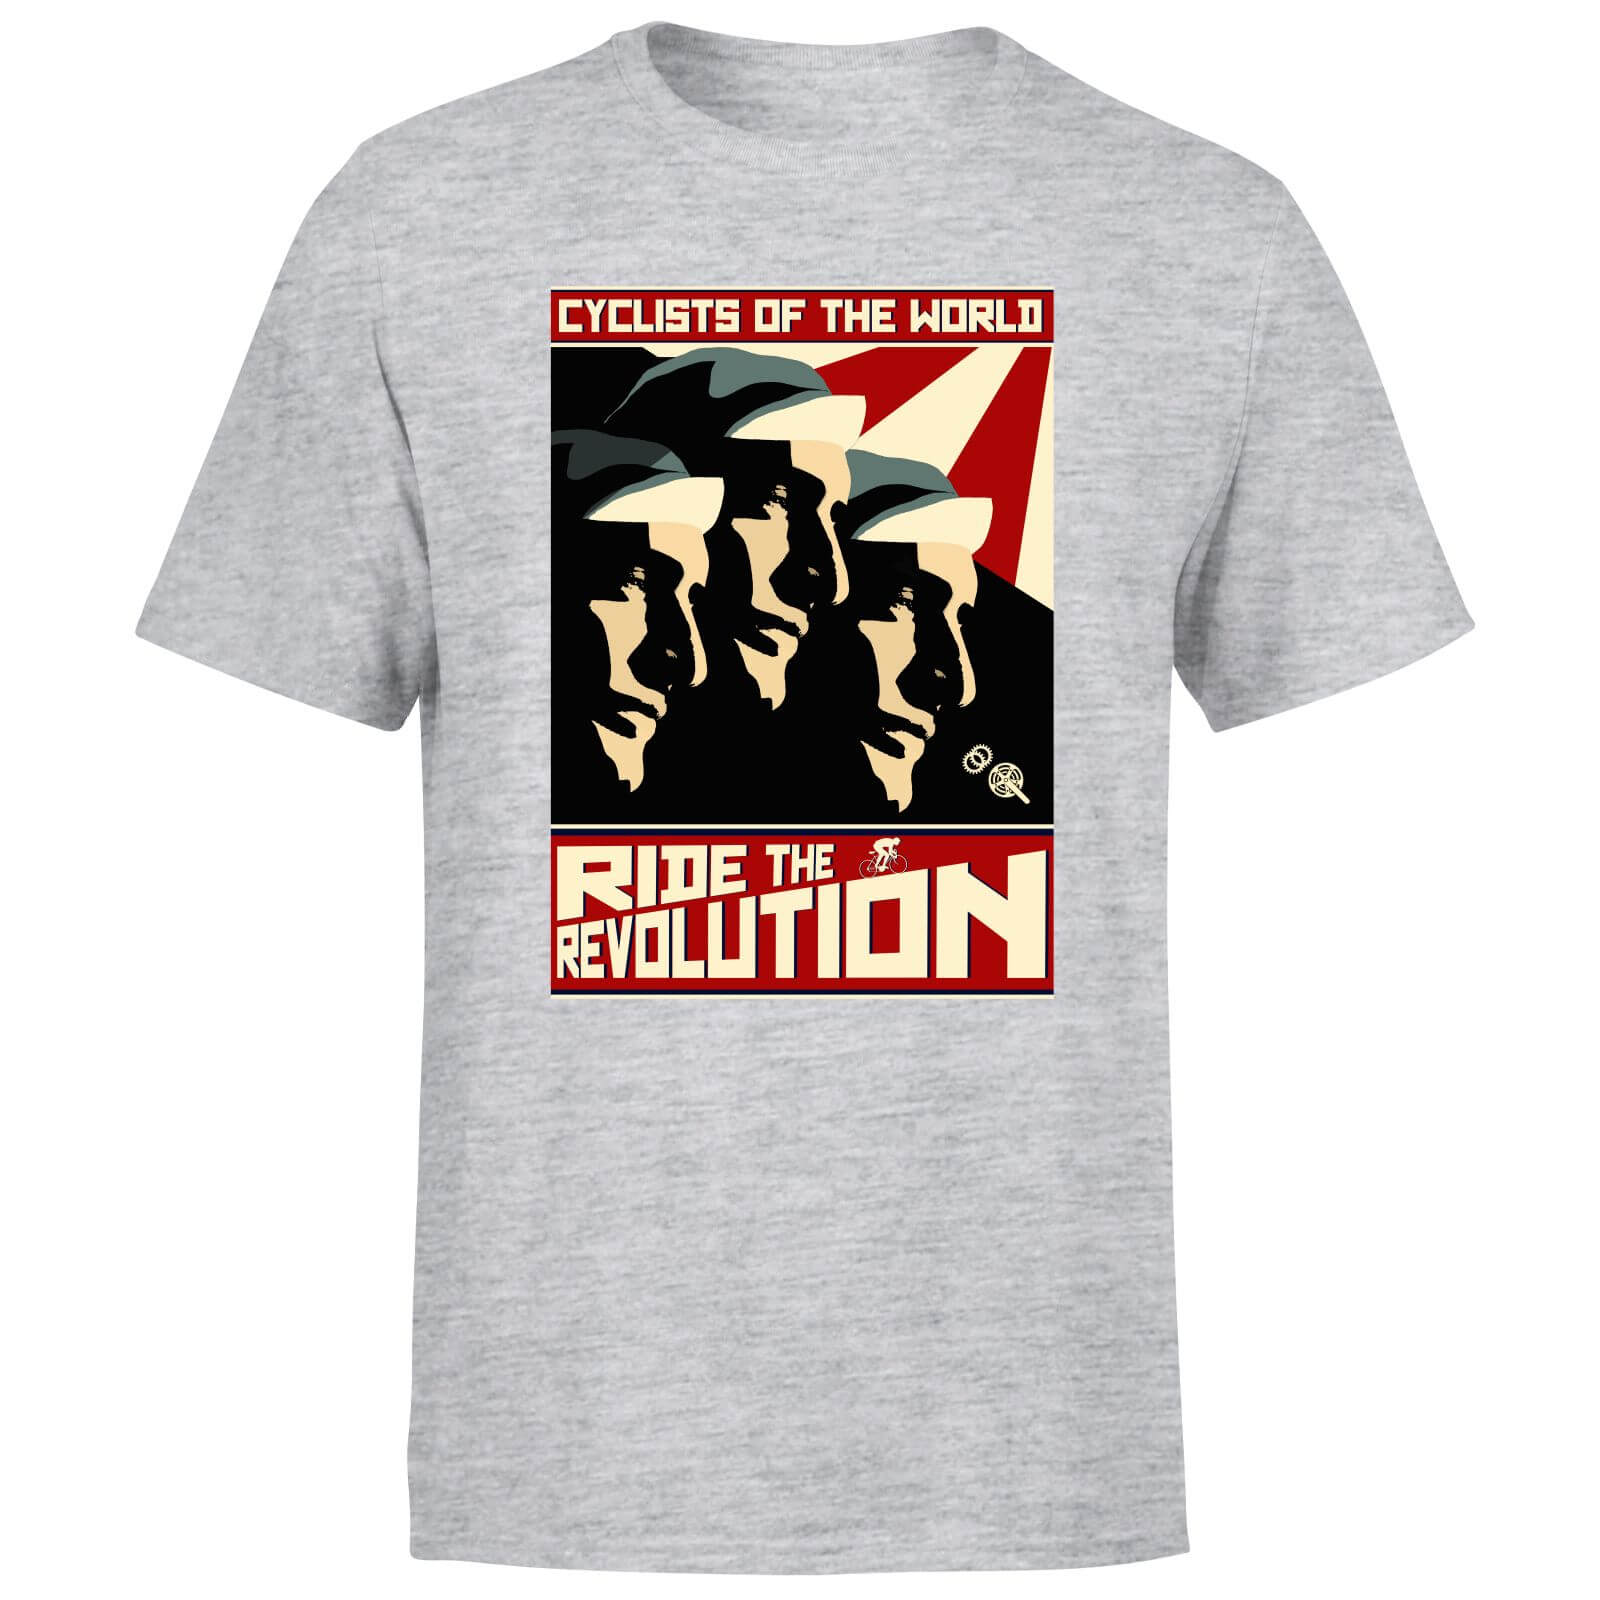 Revolution Men's T-Shirt - Grey - L - Grey